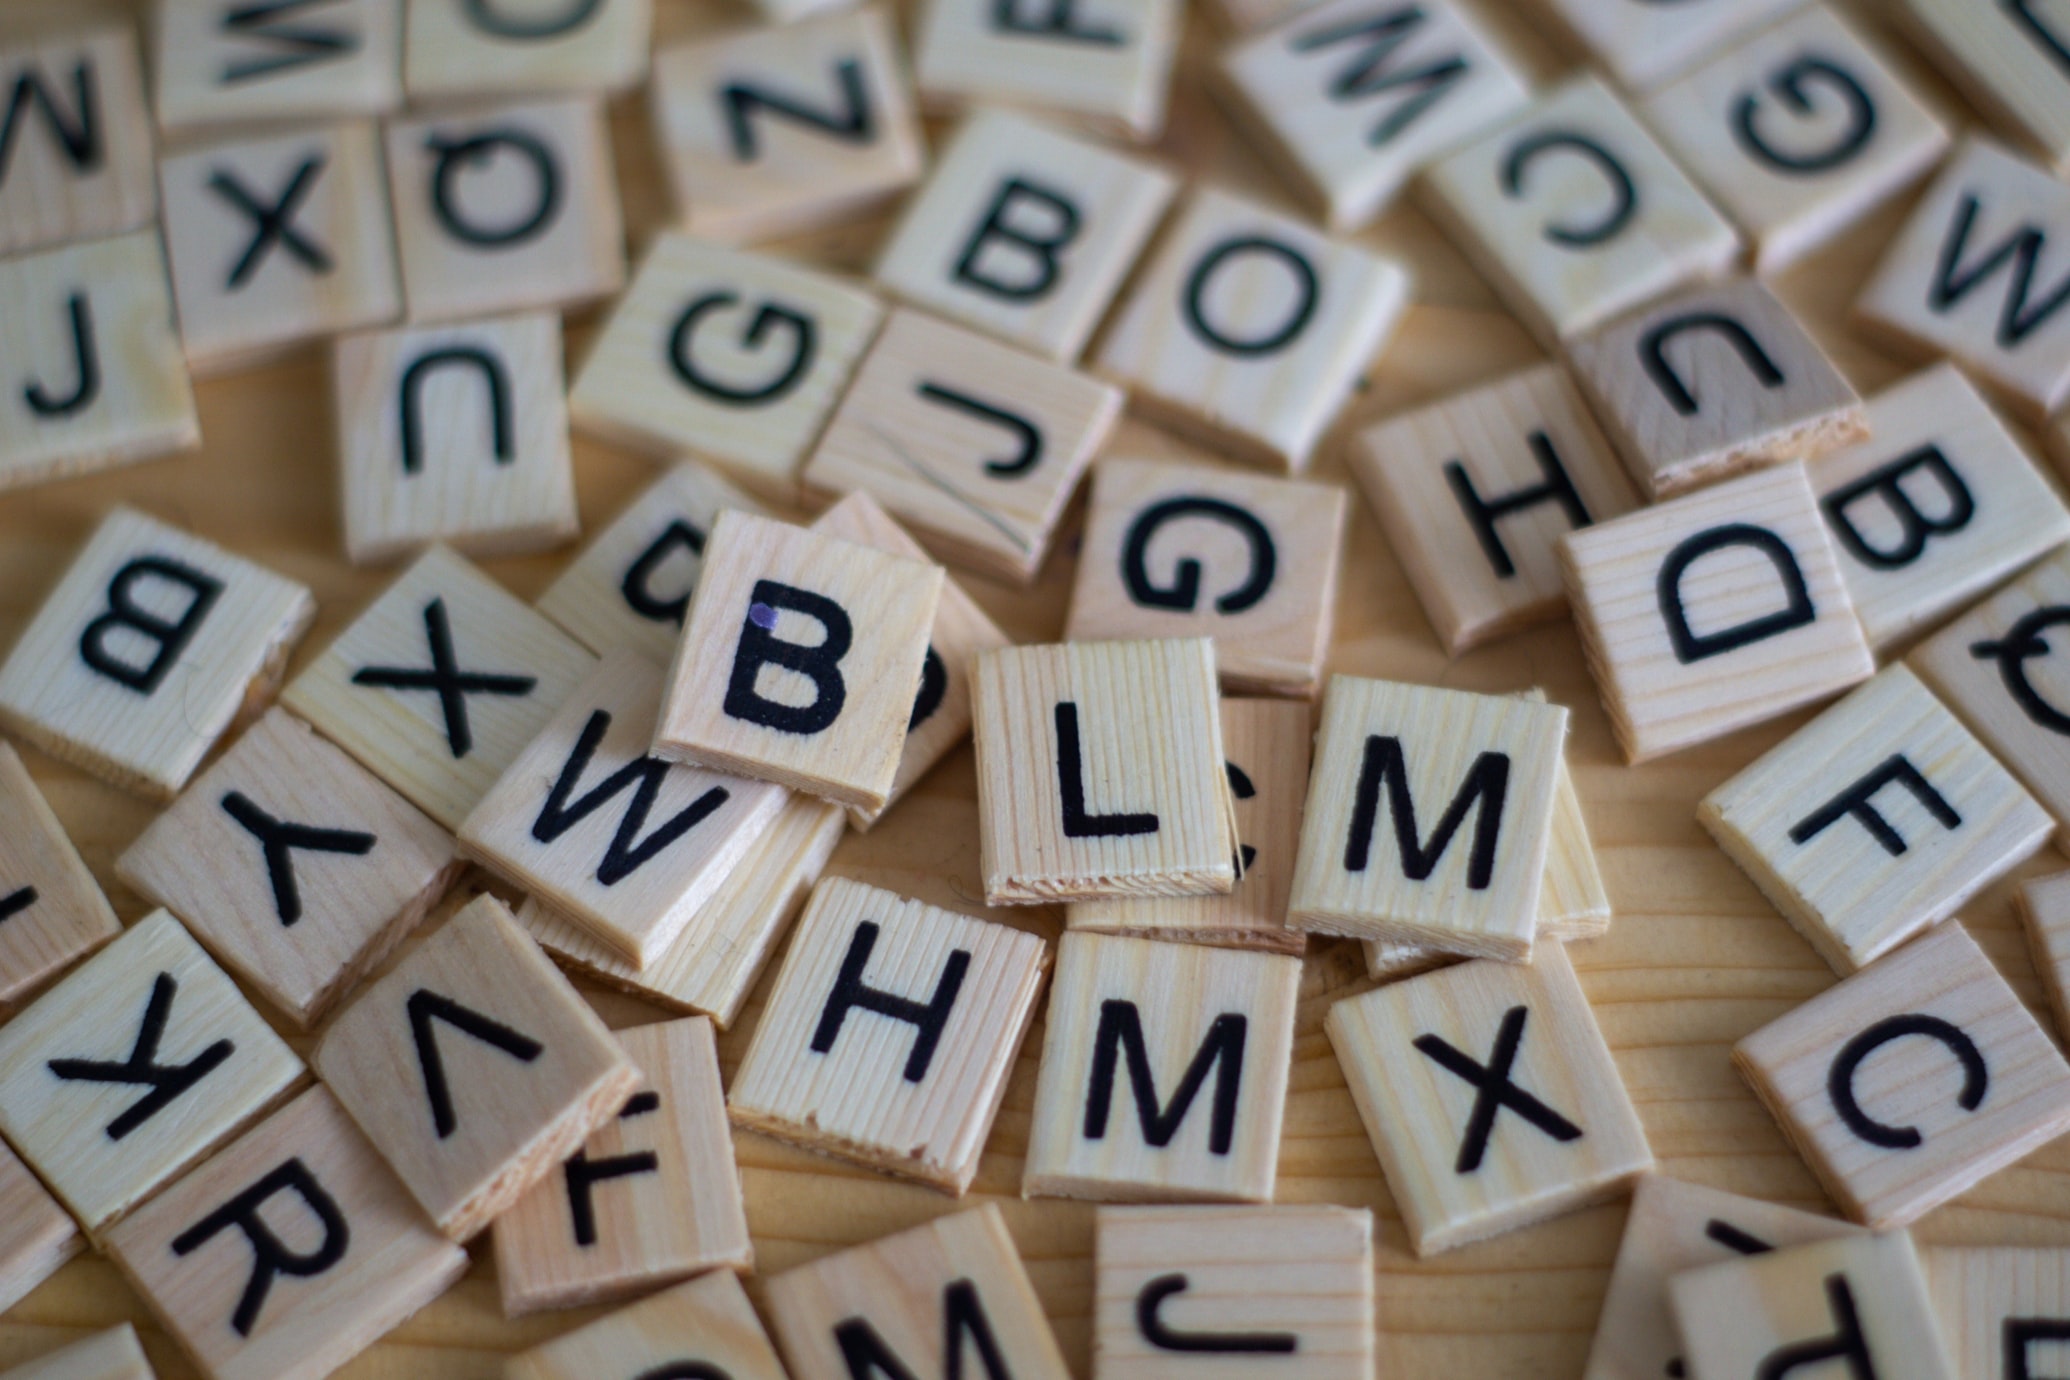 Scrabble tiles in a pile. 